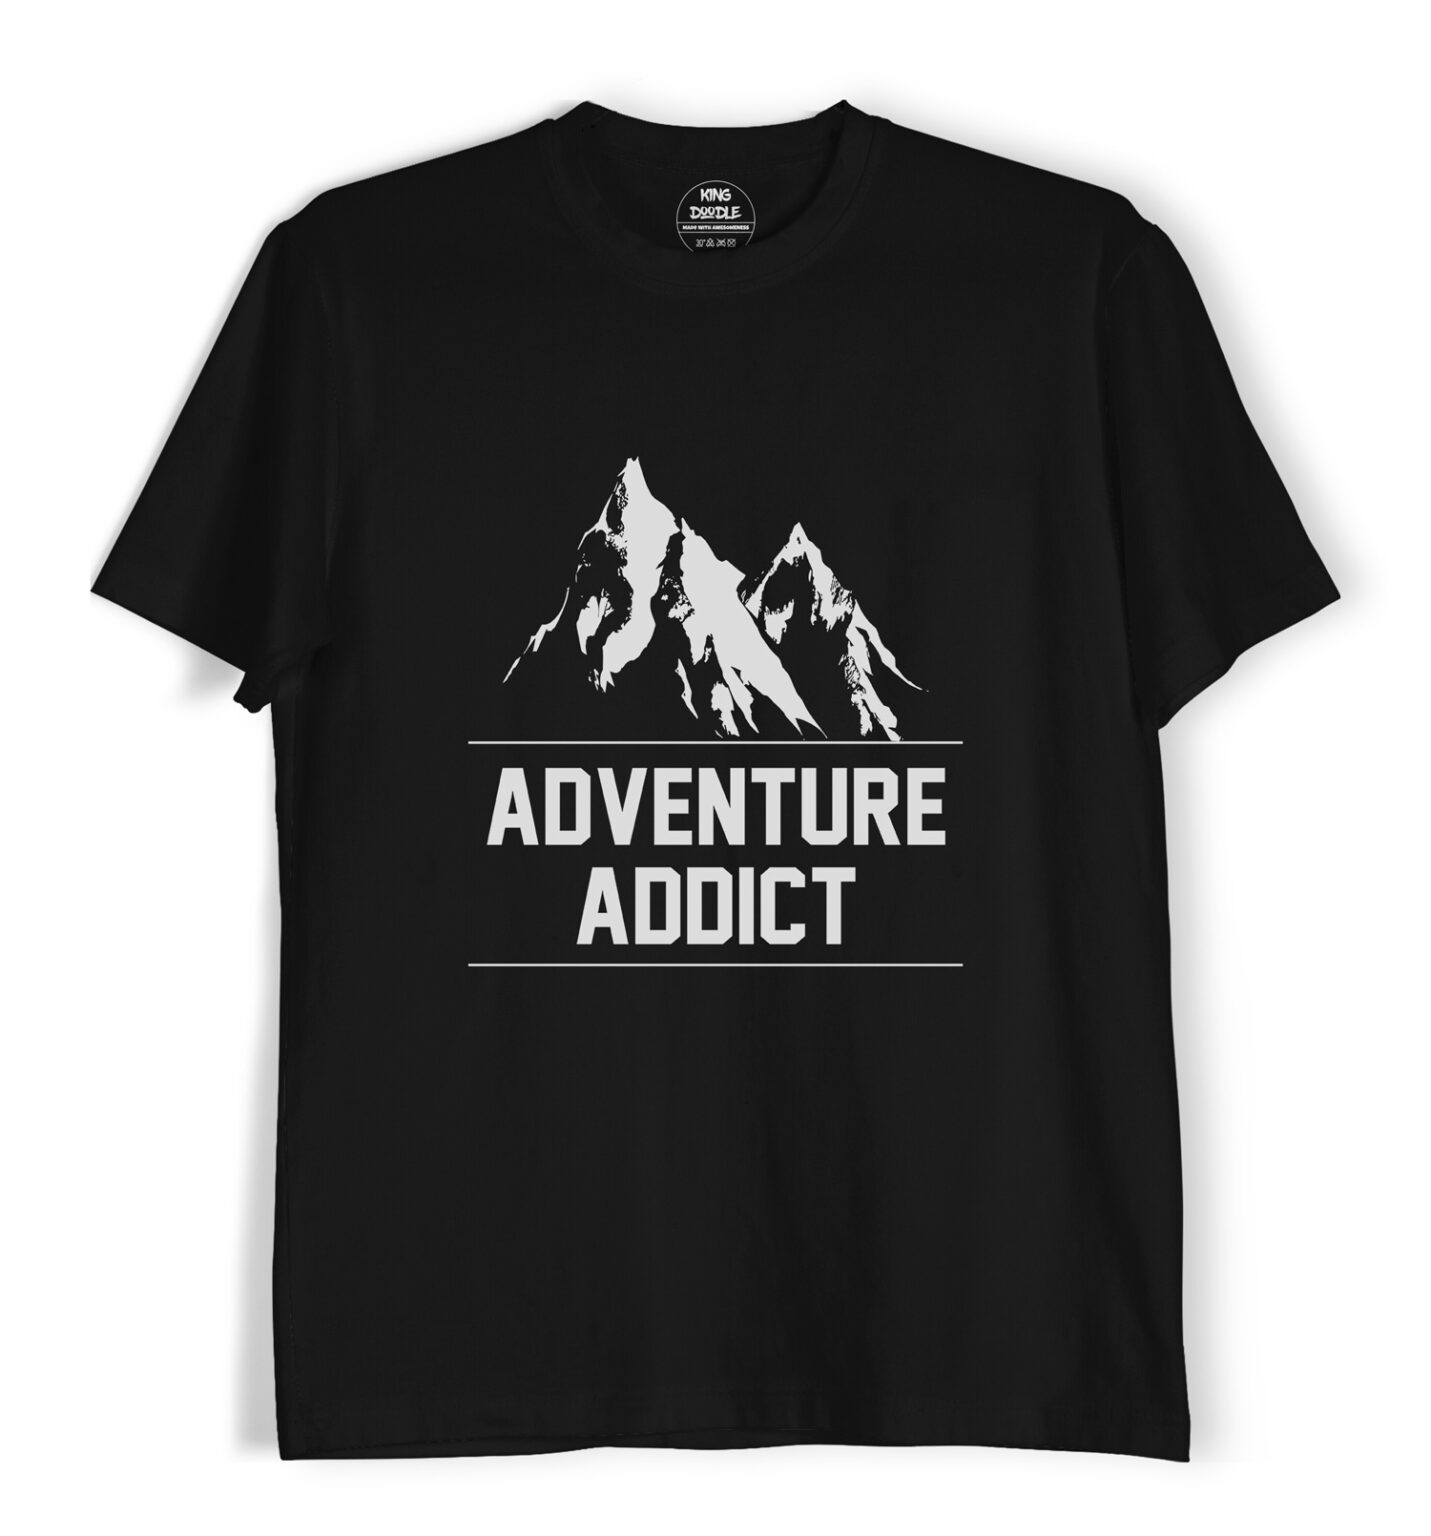 travel t shirt online shopping